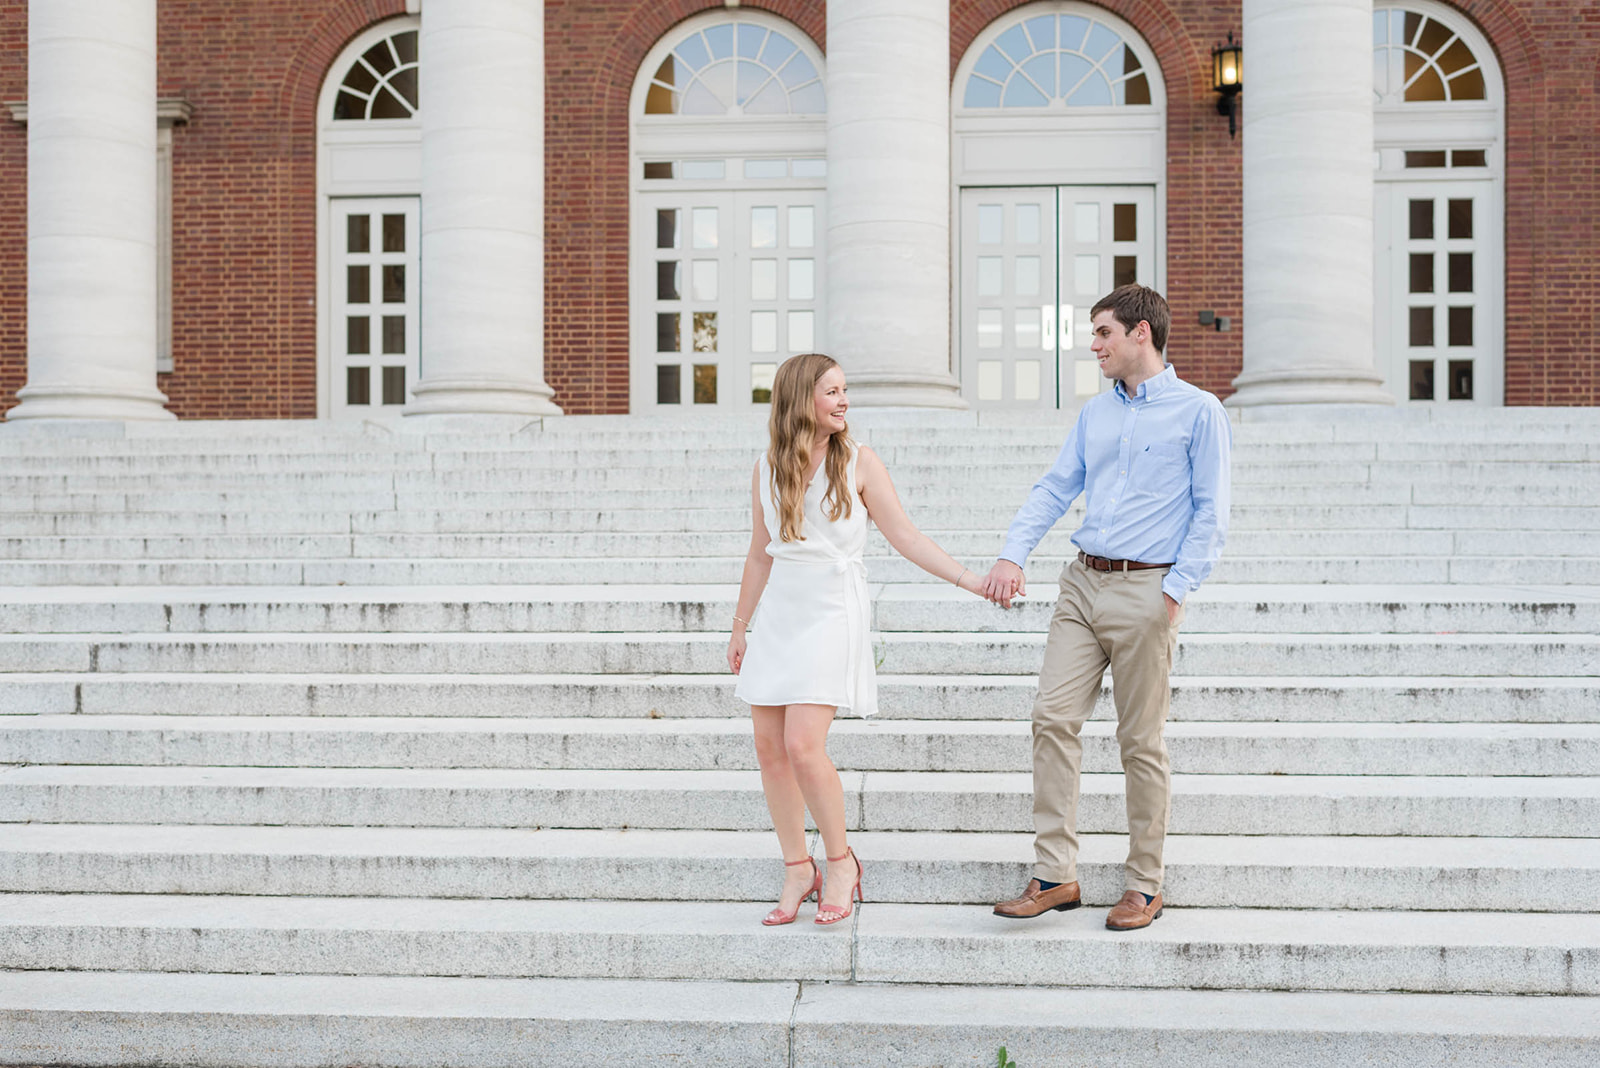 Lauren and Noah Engagement at Vanderbilt University - Nashville, Tennessee - Sweet Williams Photography